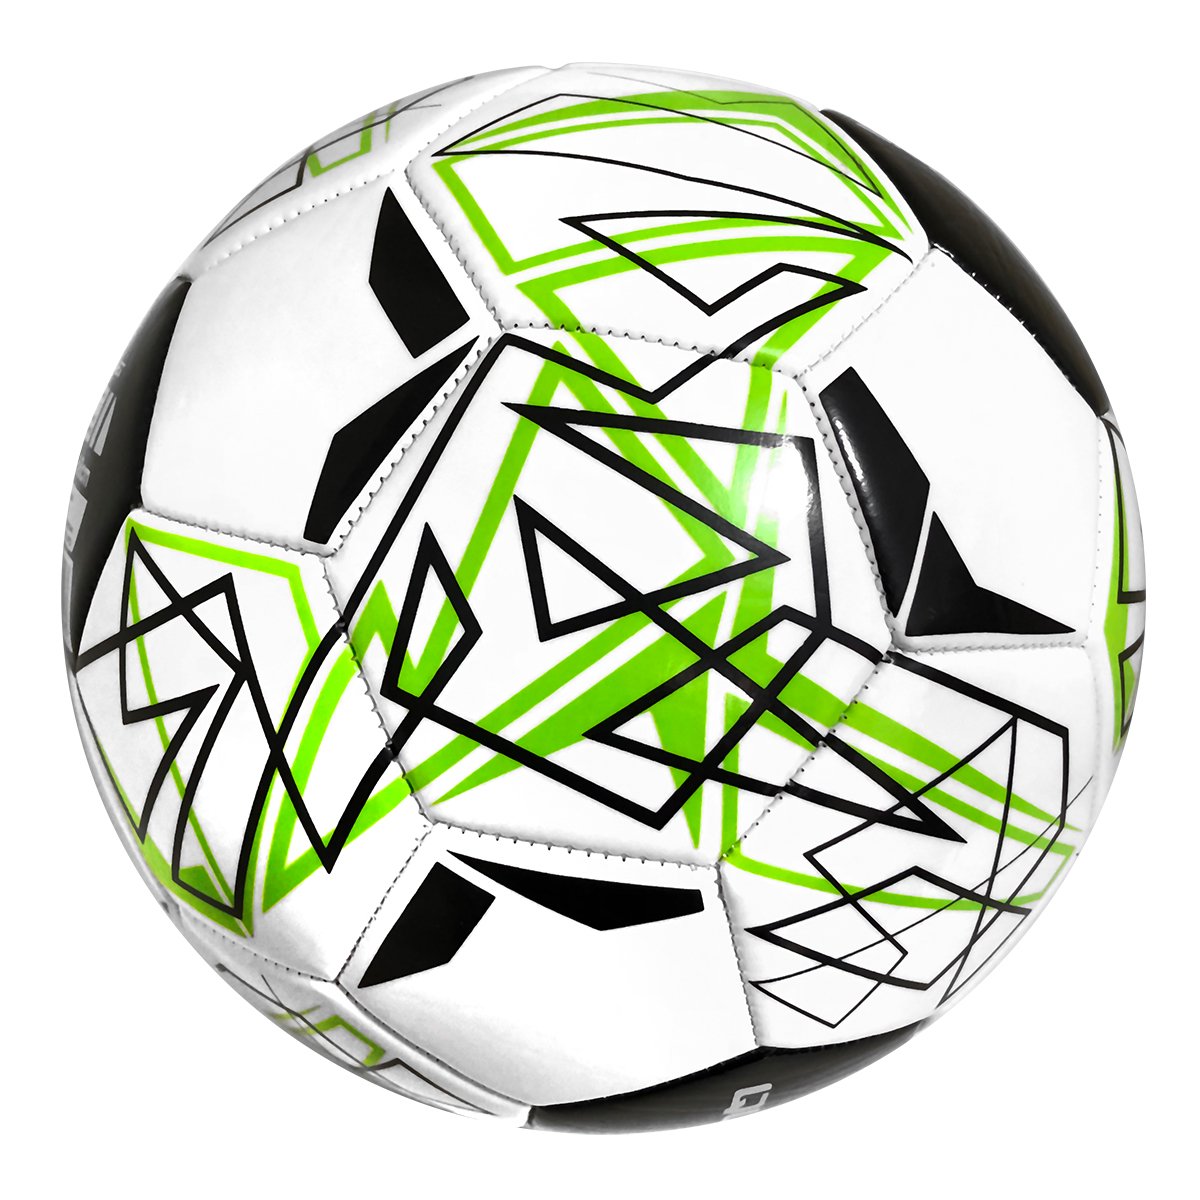 М'яч футбольний SportVida SV-WX0009 Size 5